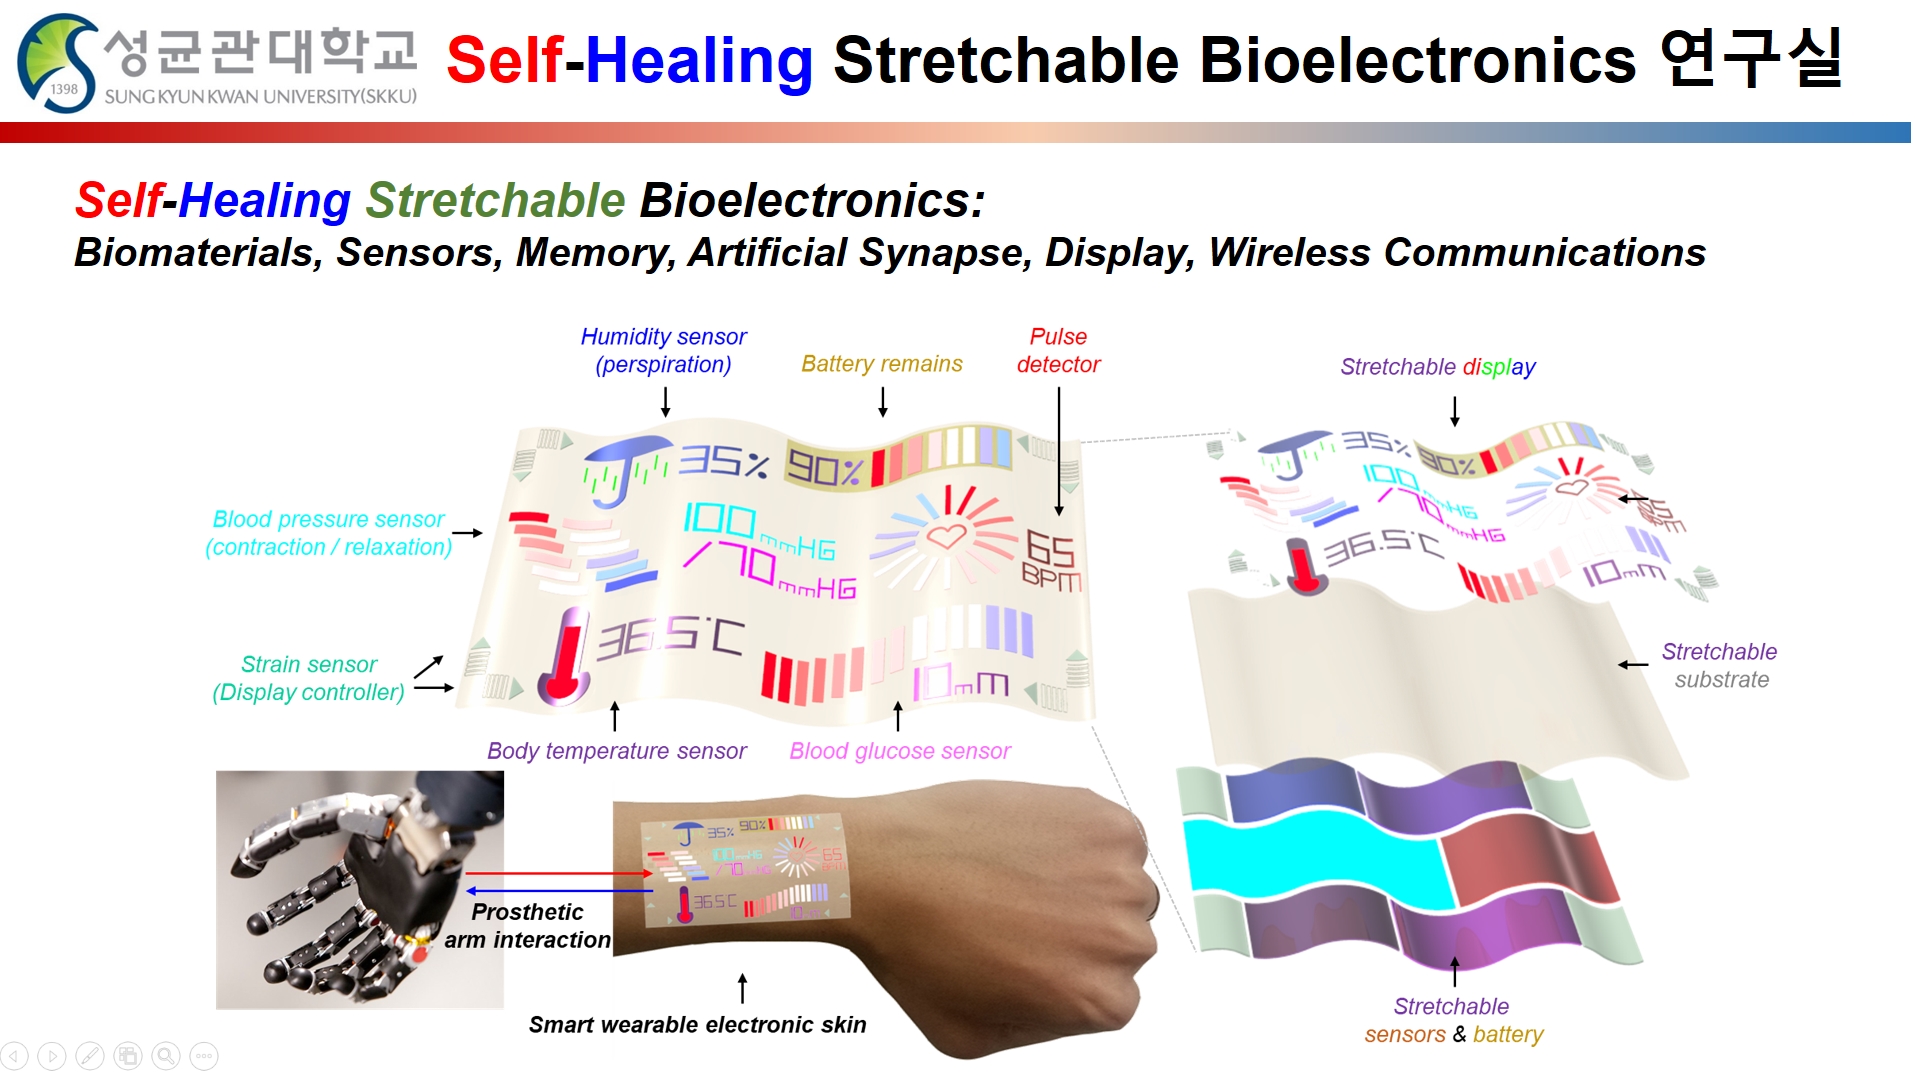 Self-Healing Stretchable Bioelectronics